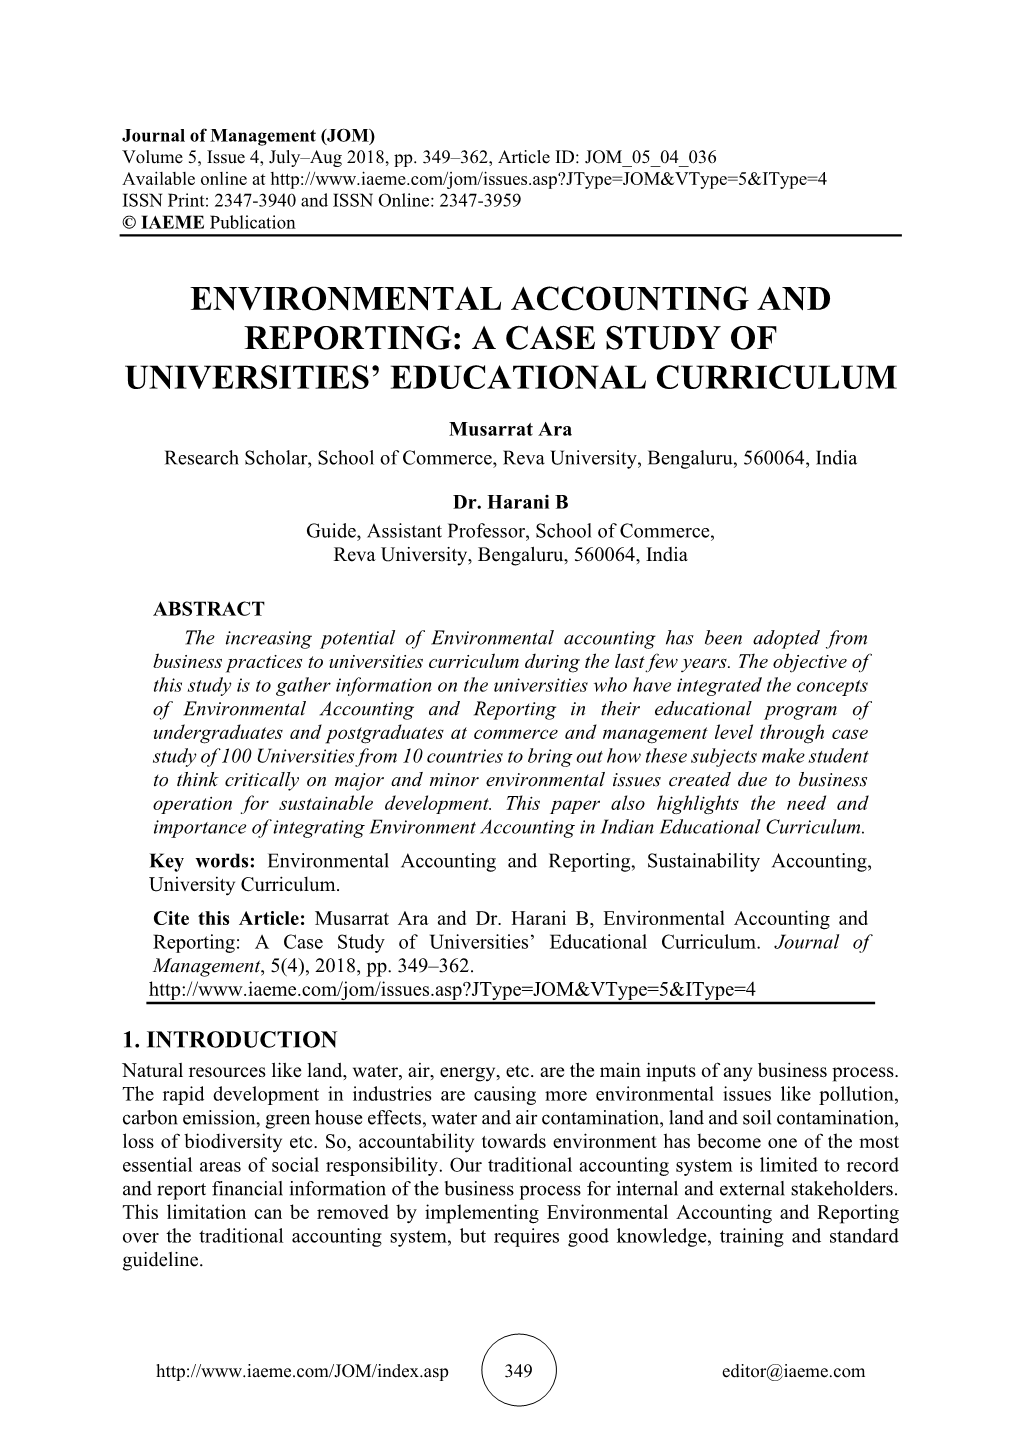 A Case Study of Universities' Educational Curriculum